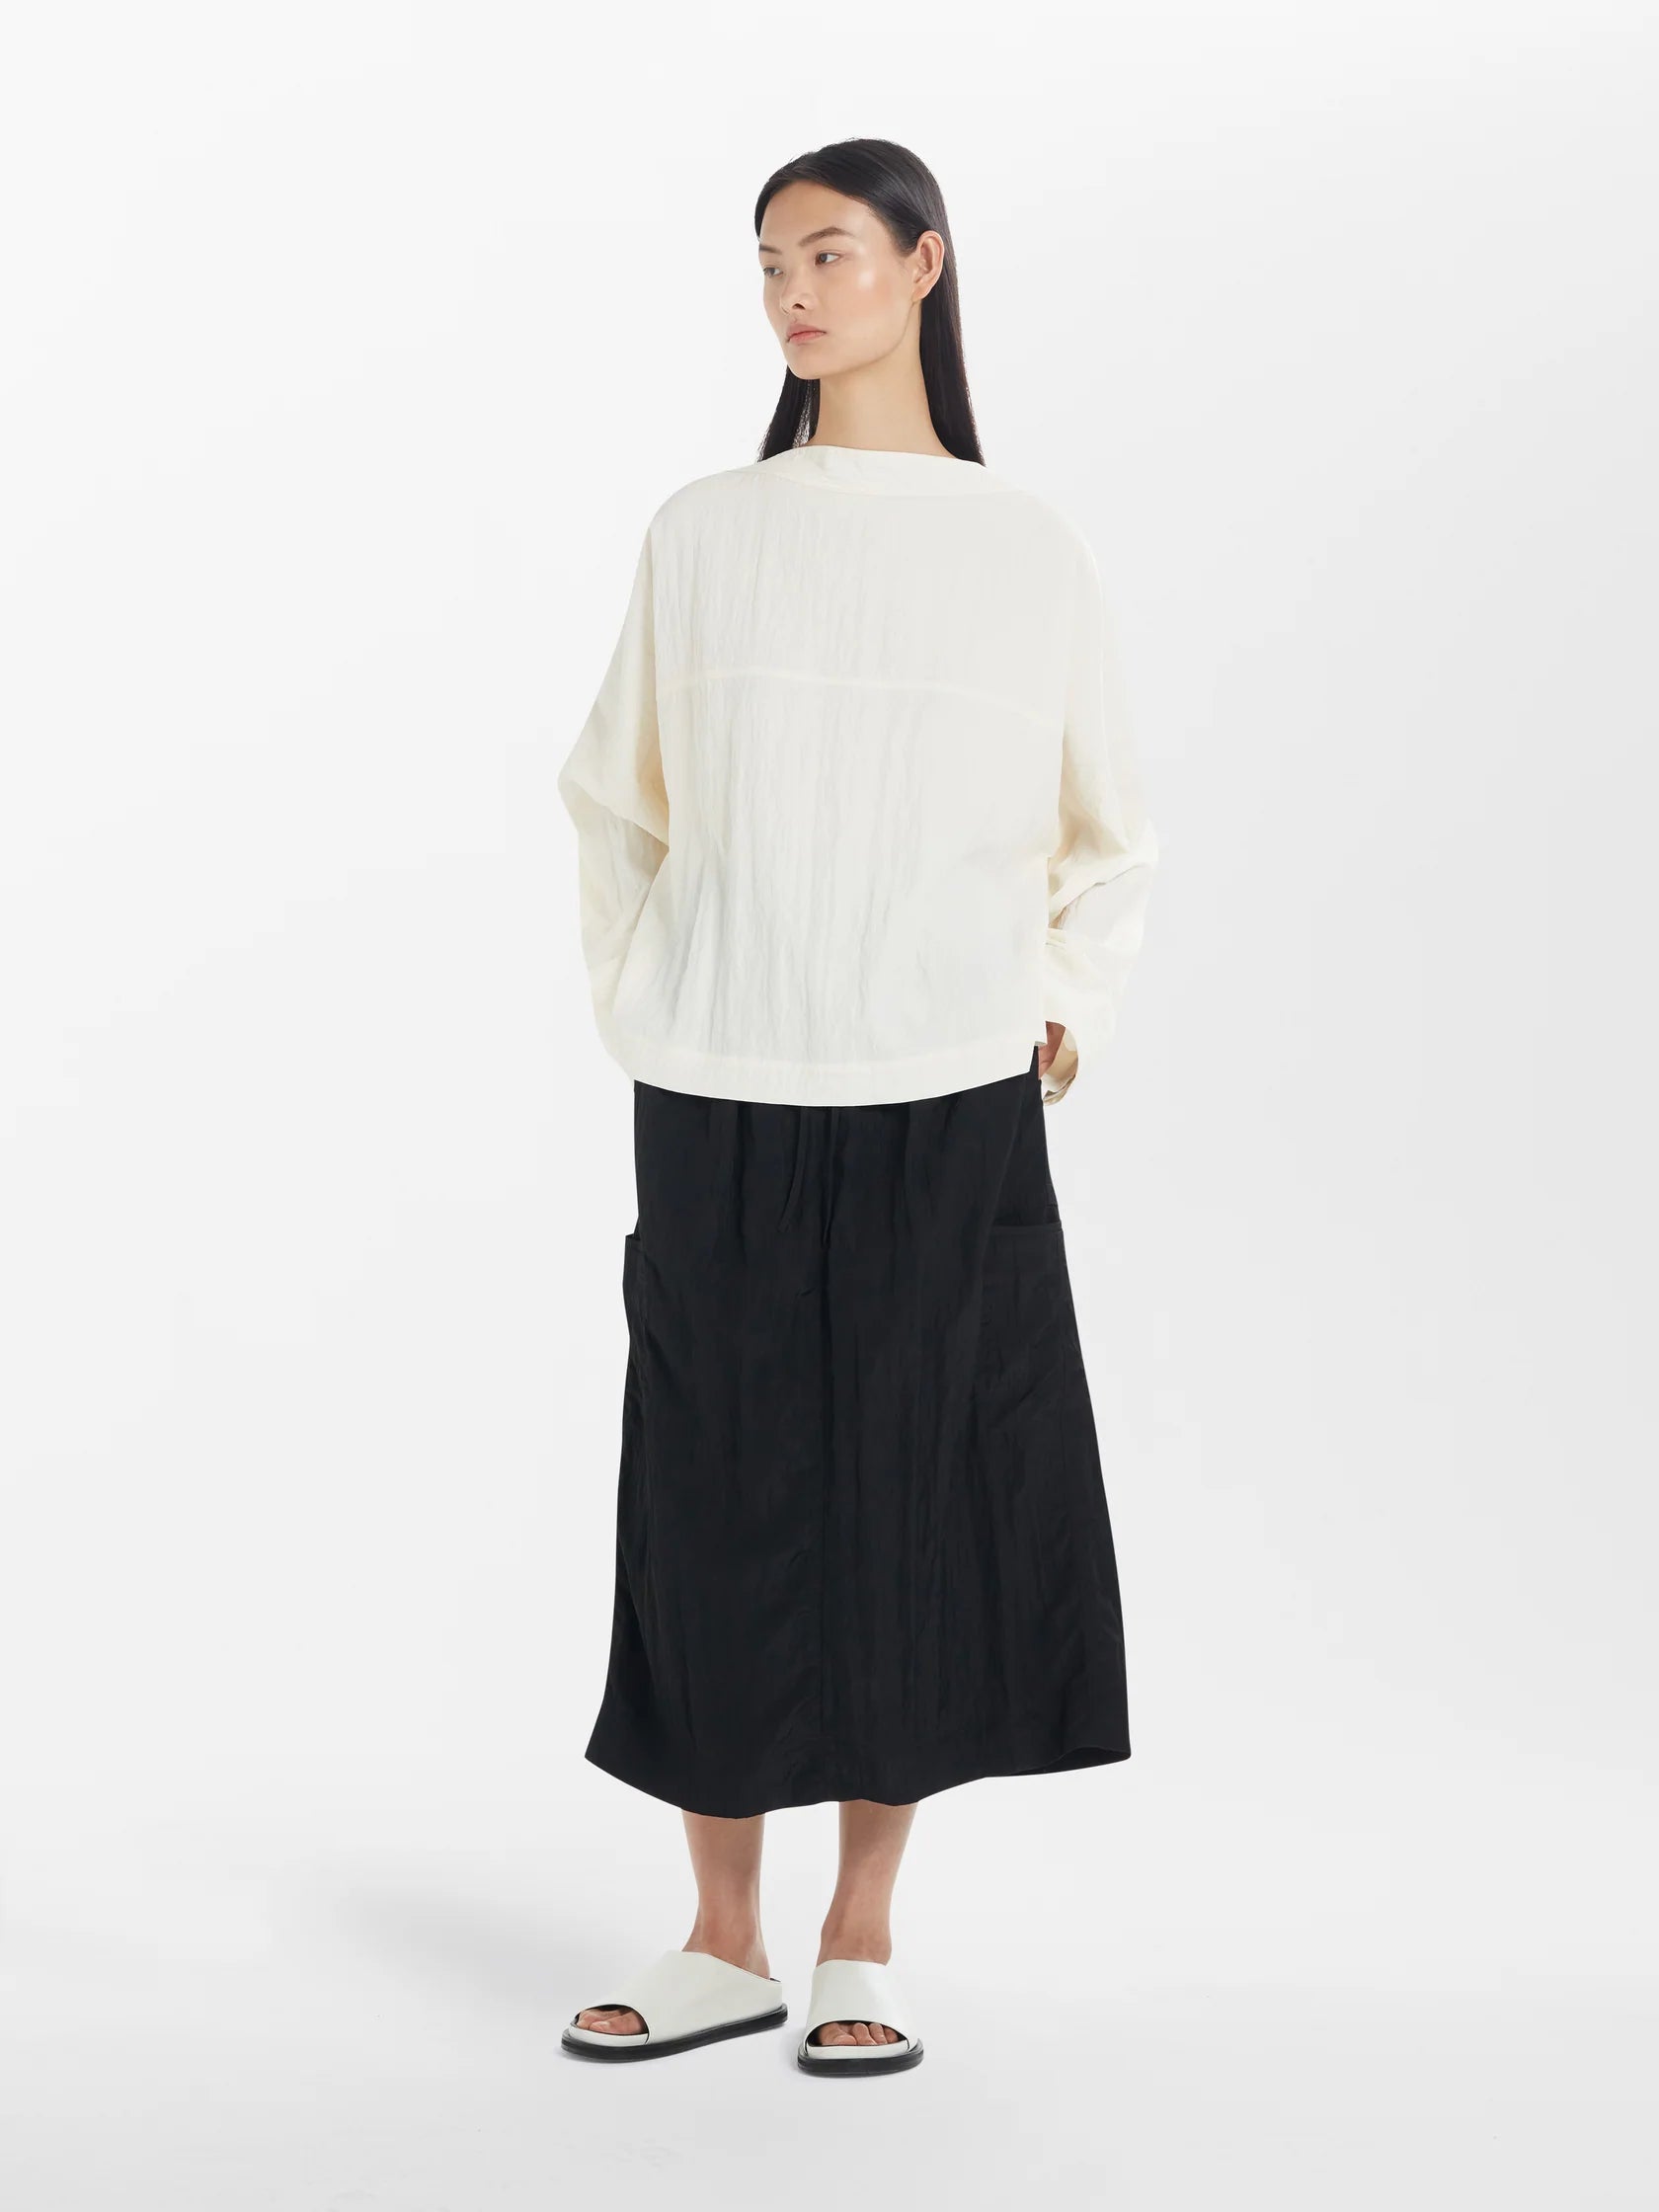 Namu Shop - Studio Nicholson Soledad Textured Viscose Drawstring Skirt - Black